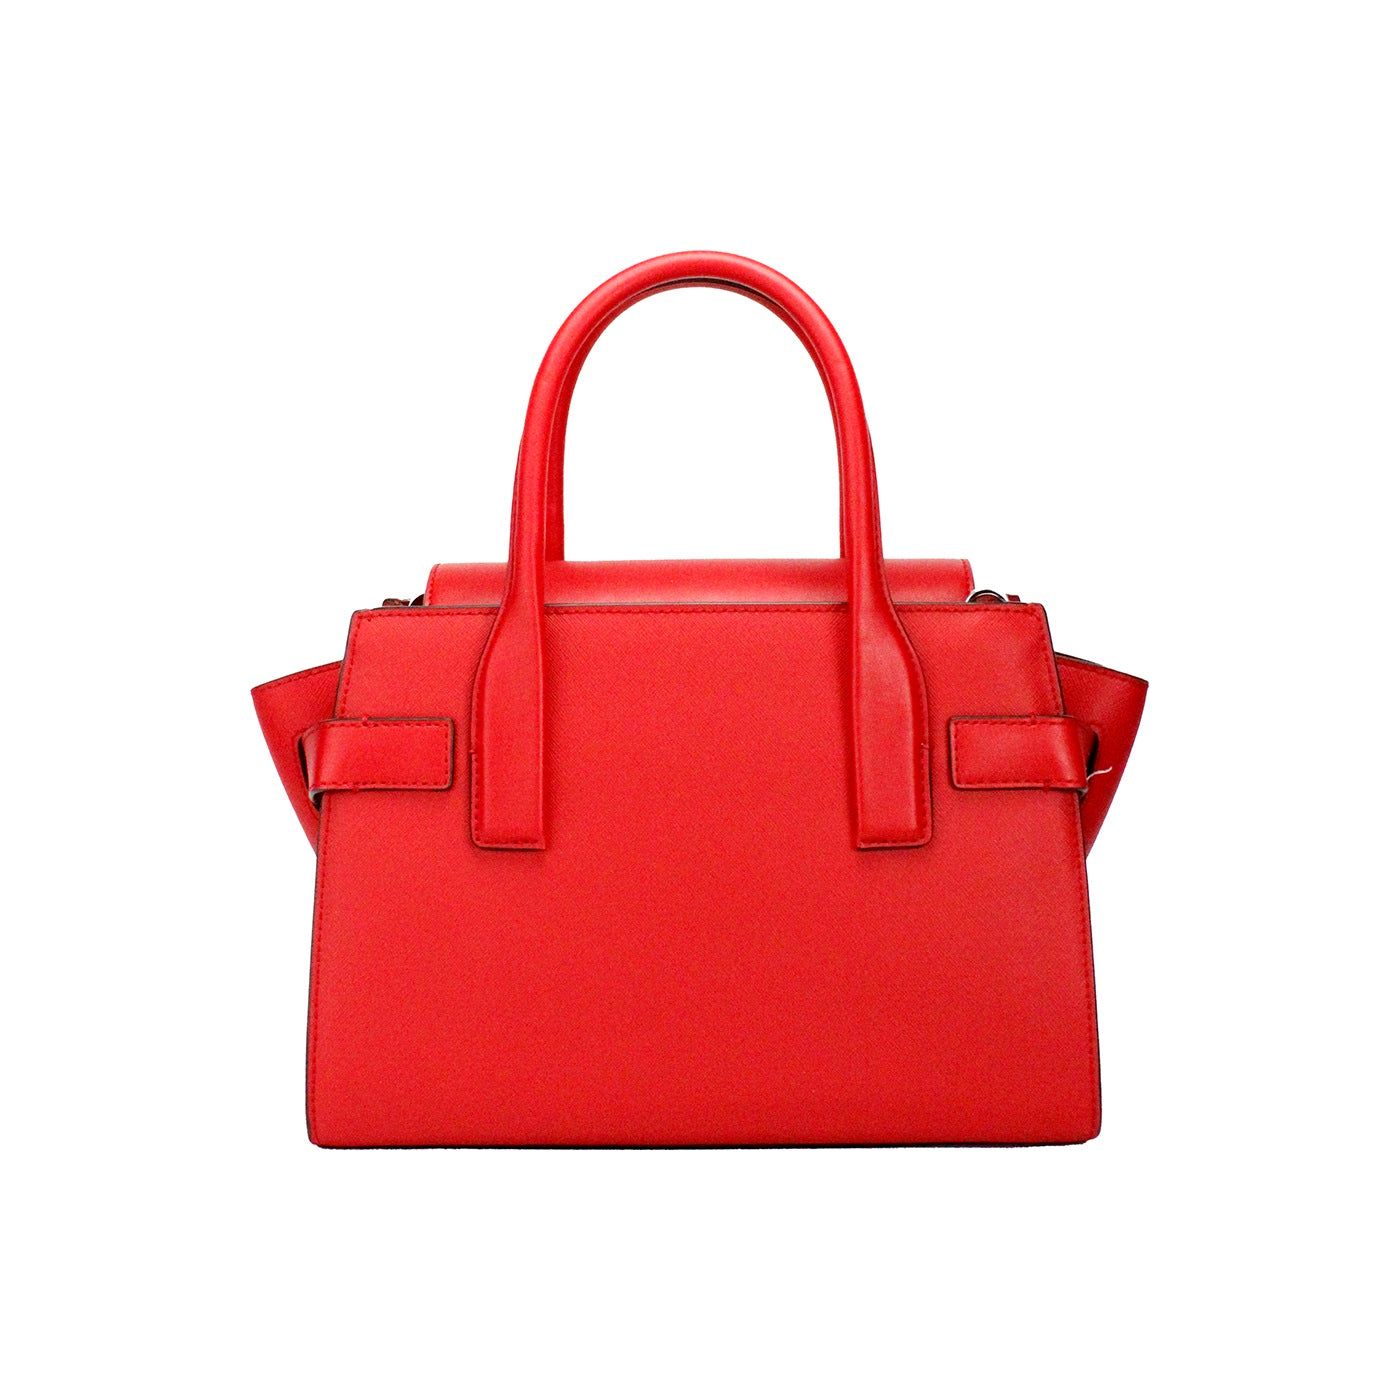 Michael Kors Carmen Medium Bright Red Leather Satchel Bag Purse carmen-medium-bright-red-leather-satchel-bag-purse